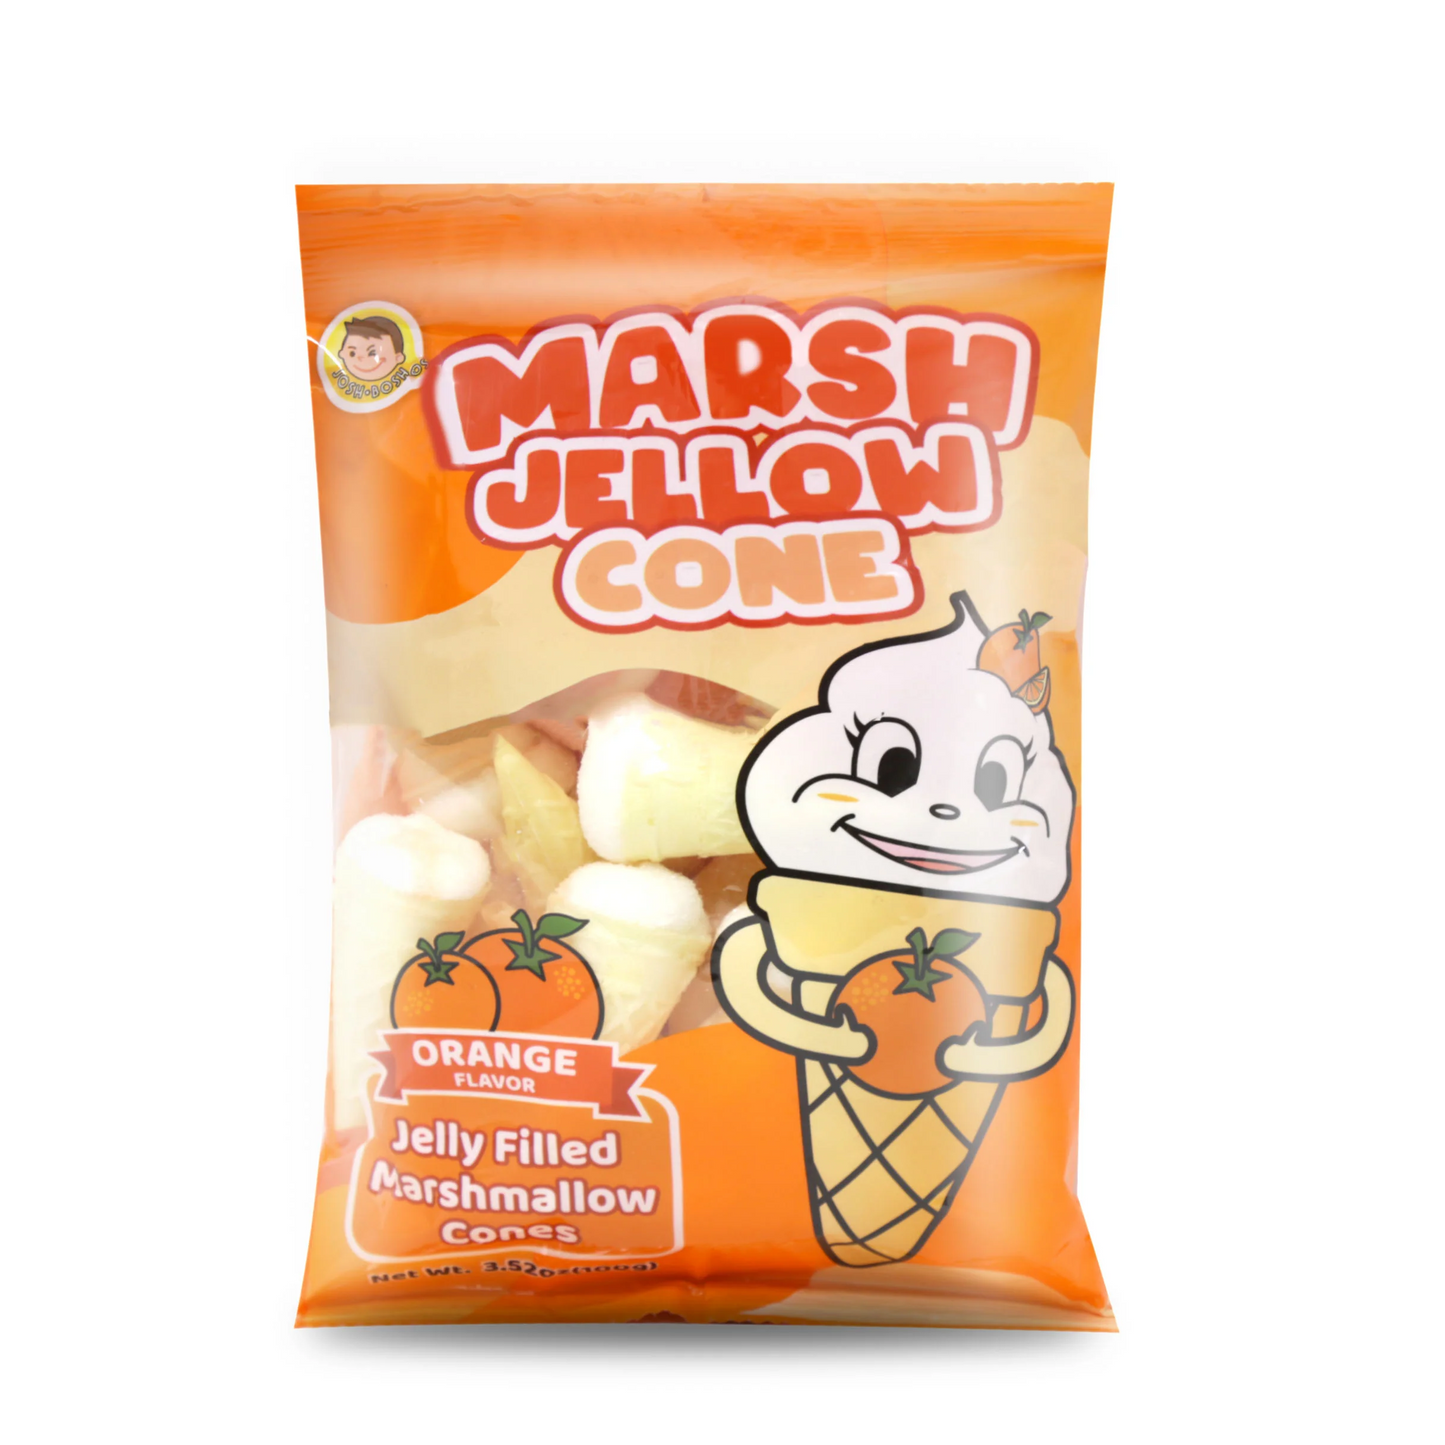 Josh Bosh - Marsh Jellow Cone - Jelly Filled Marshmallow Cones (Orange)